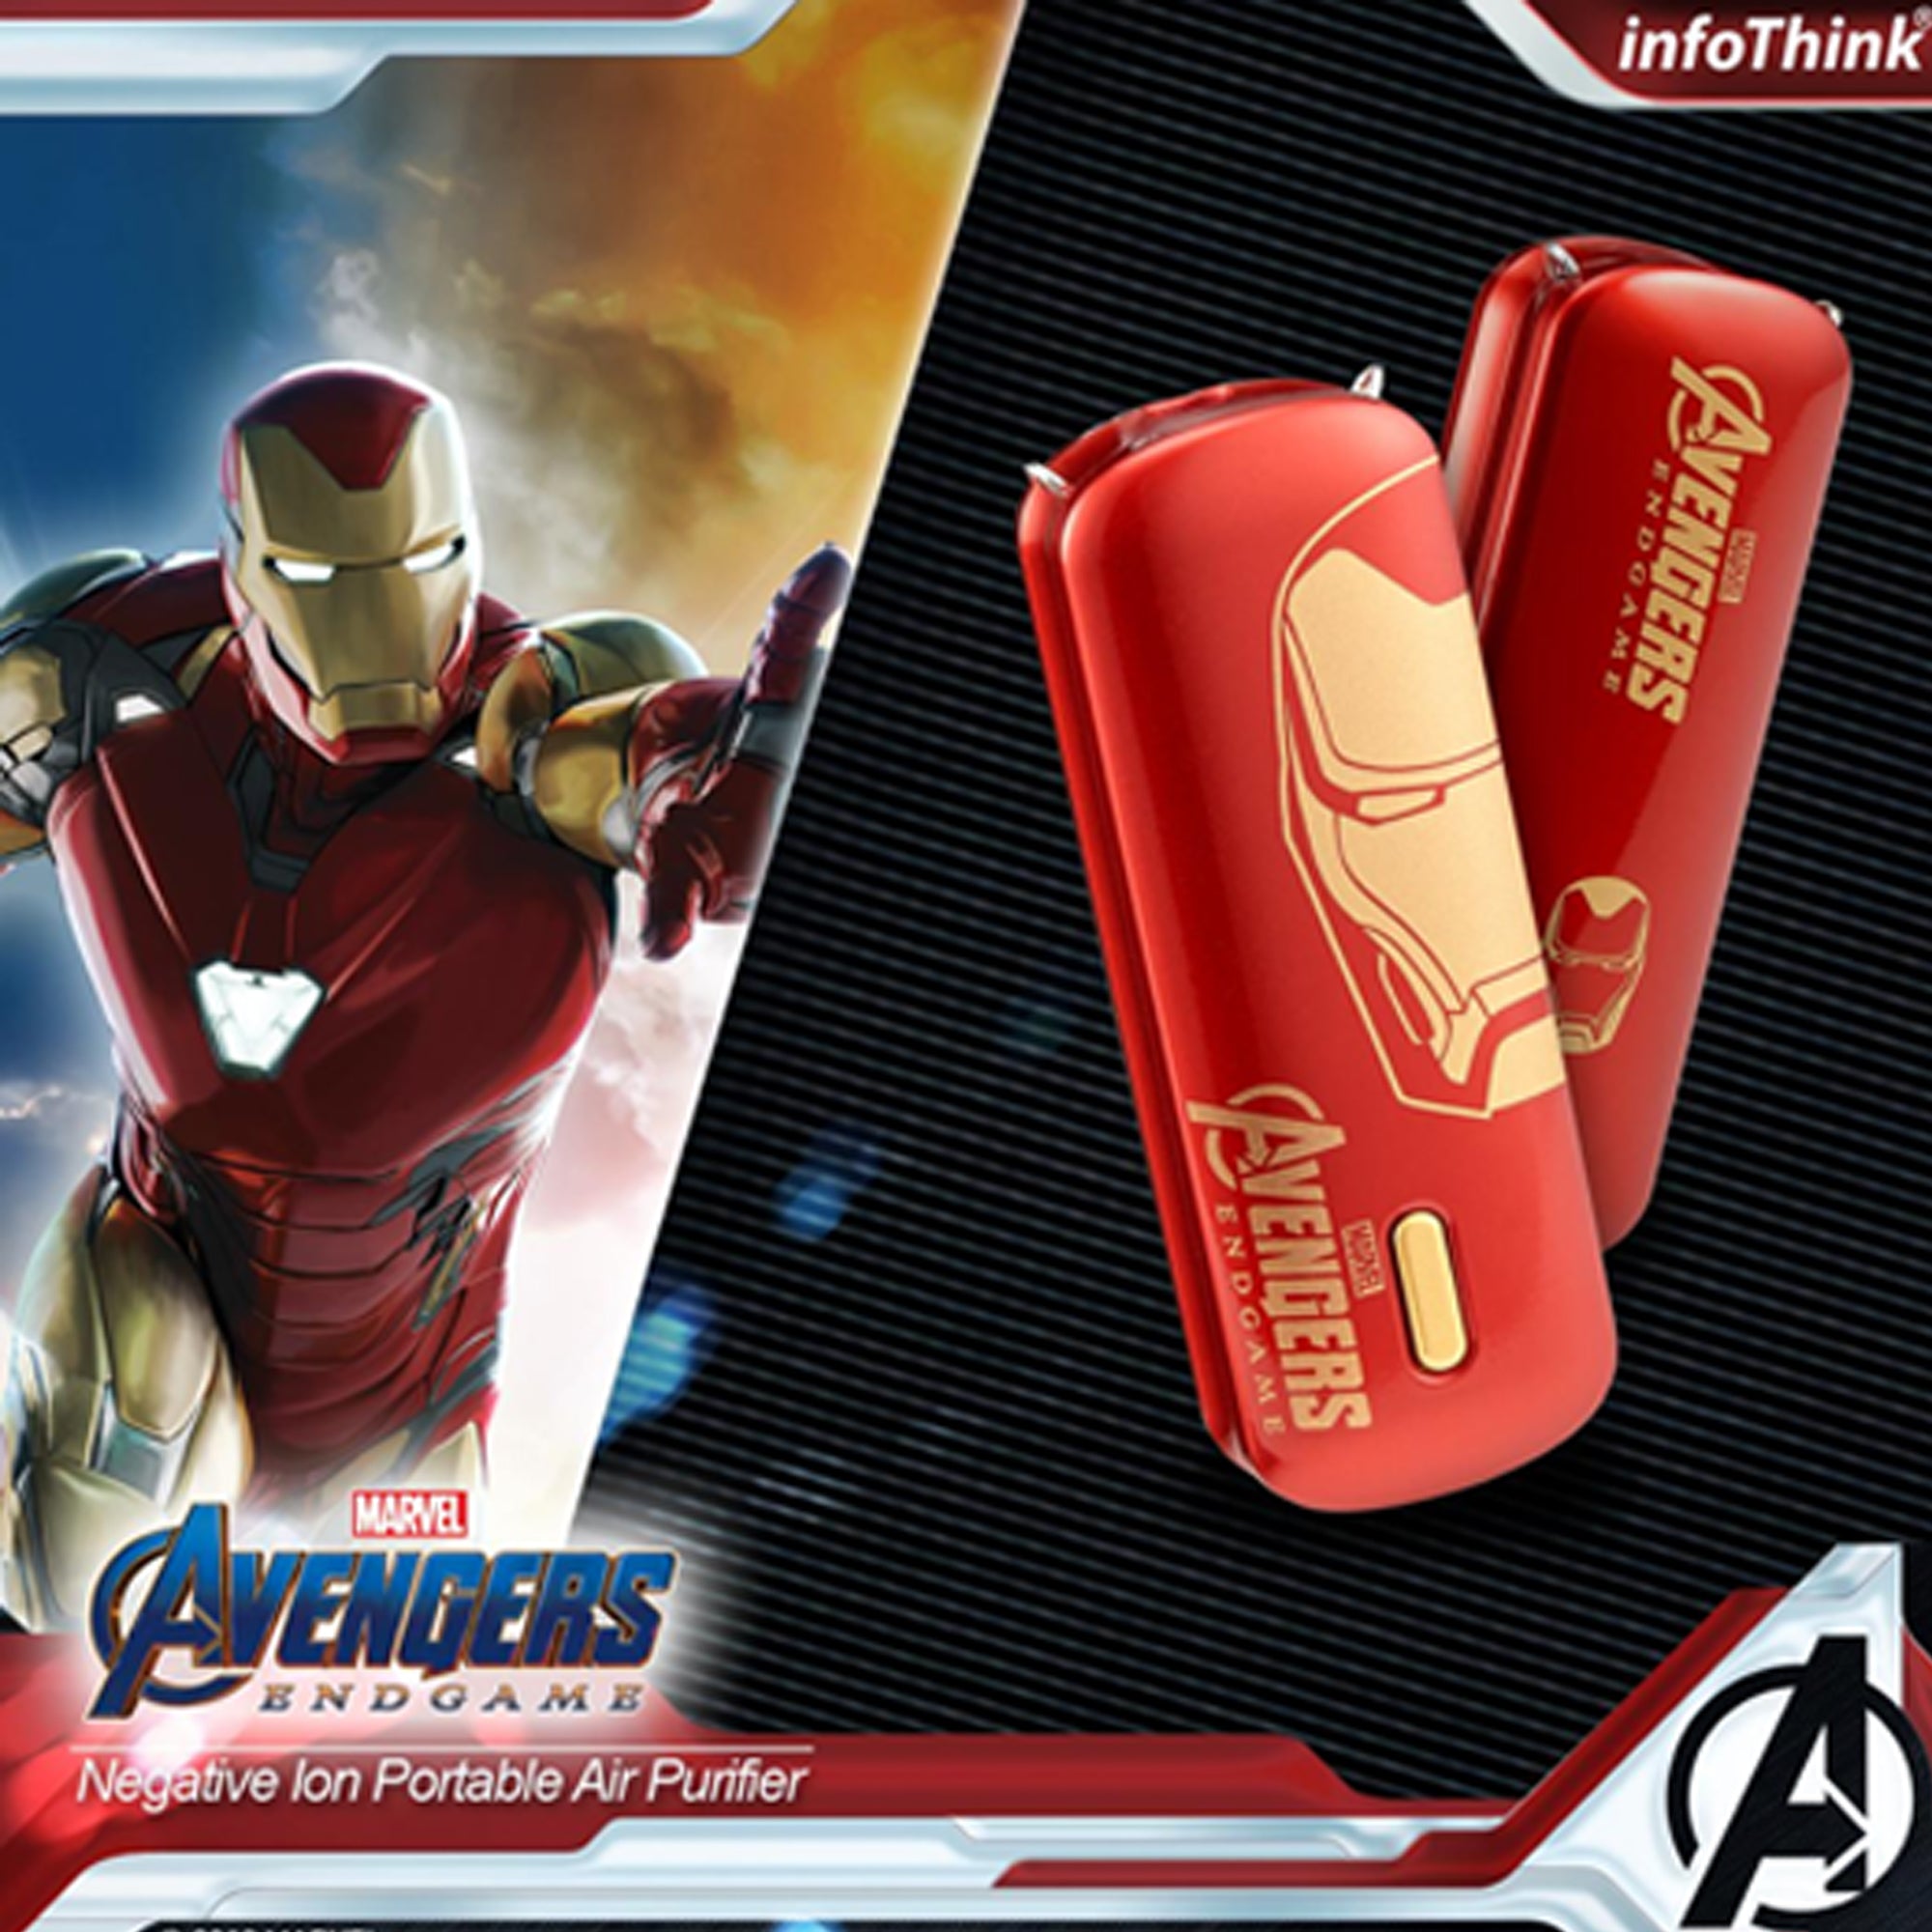 infoThink x Marvel - Iron Man隨身空氣淨化機